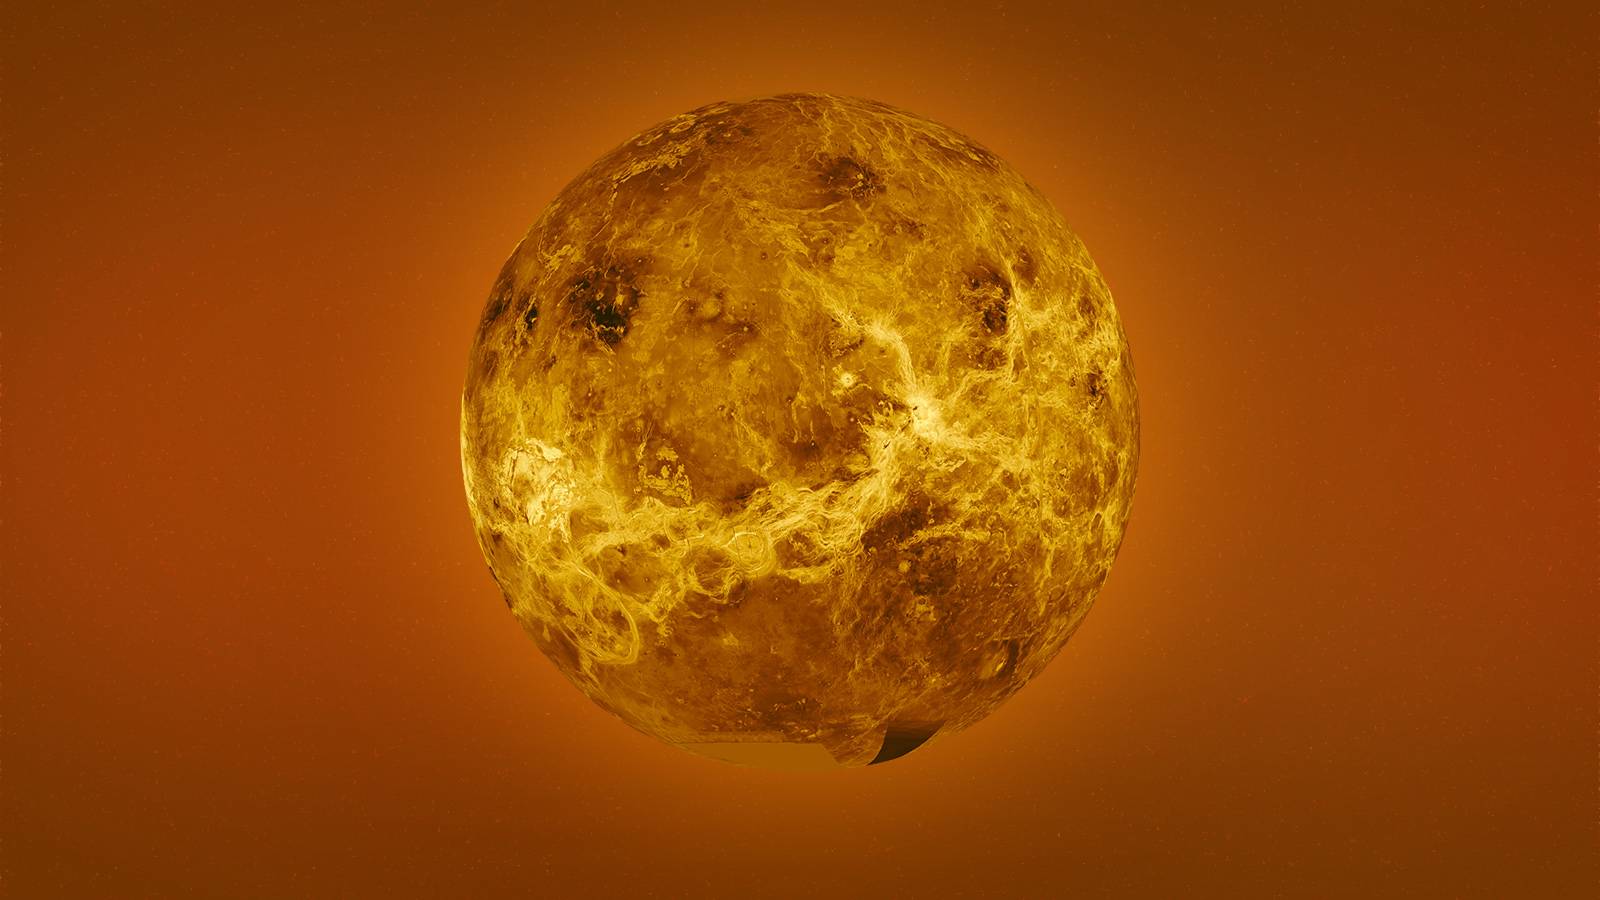 Magma del planeta Venus